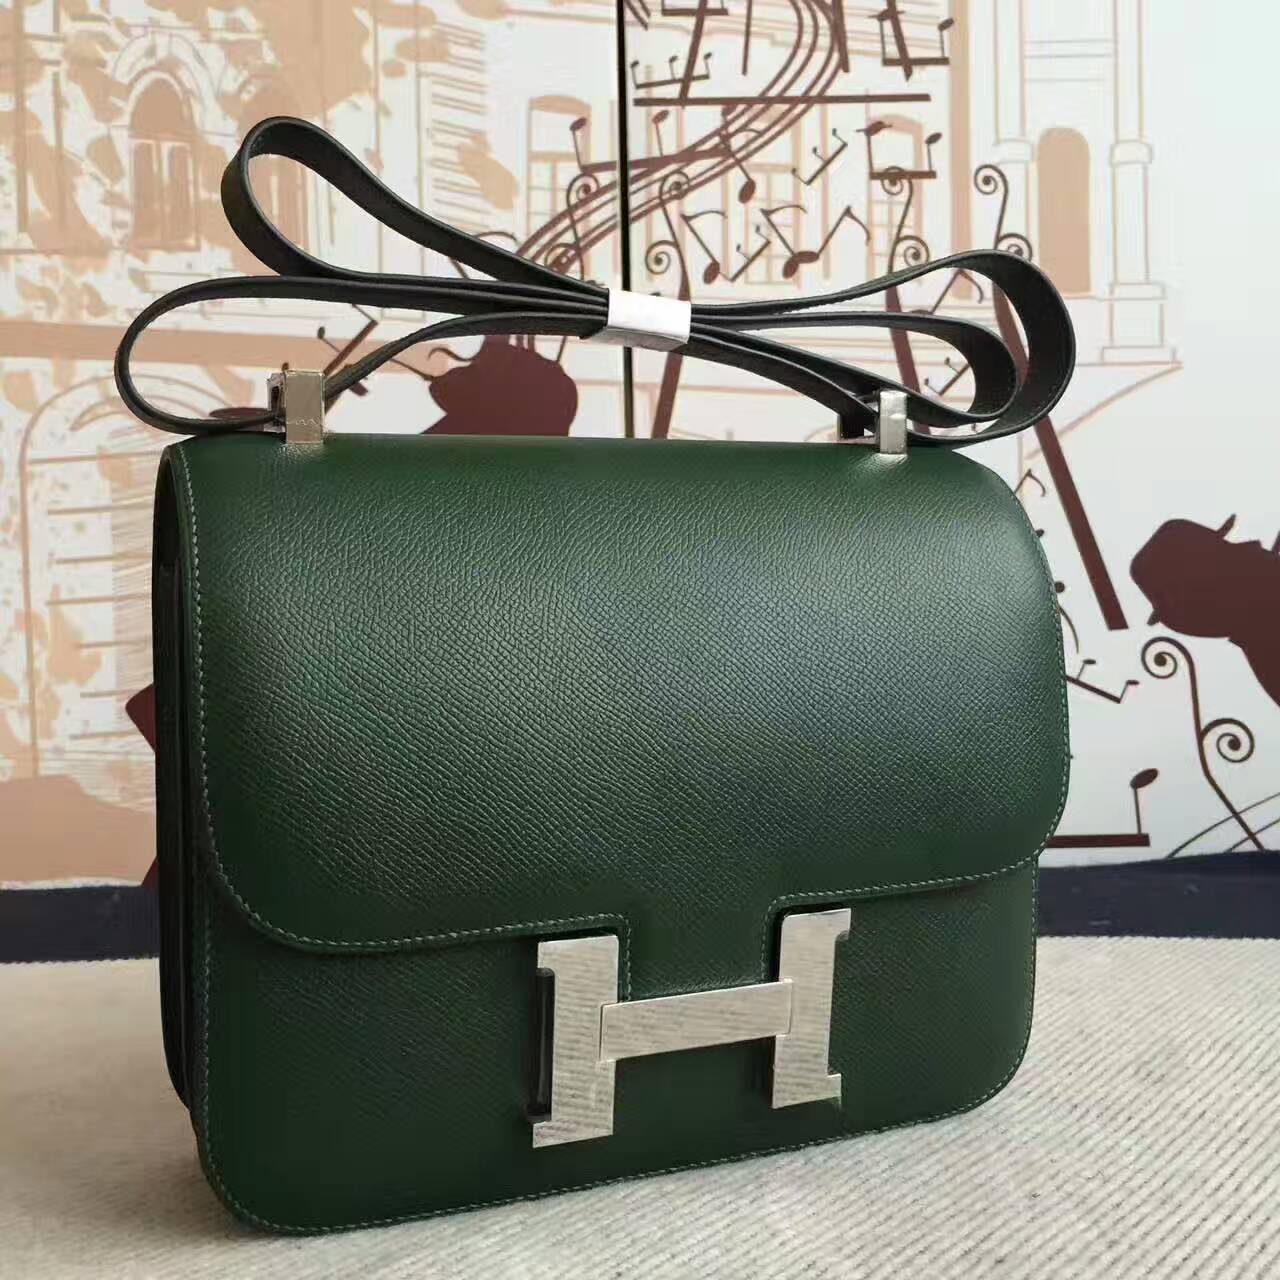 High Quality Hermes Constance Bag 24cm in 2Q Vert Anglais Epsom Leather